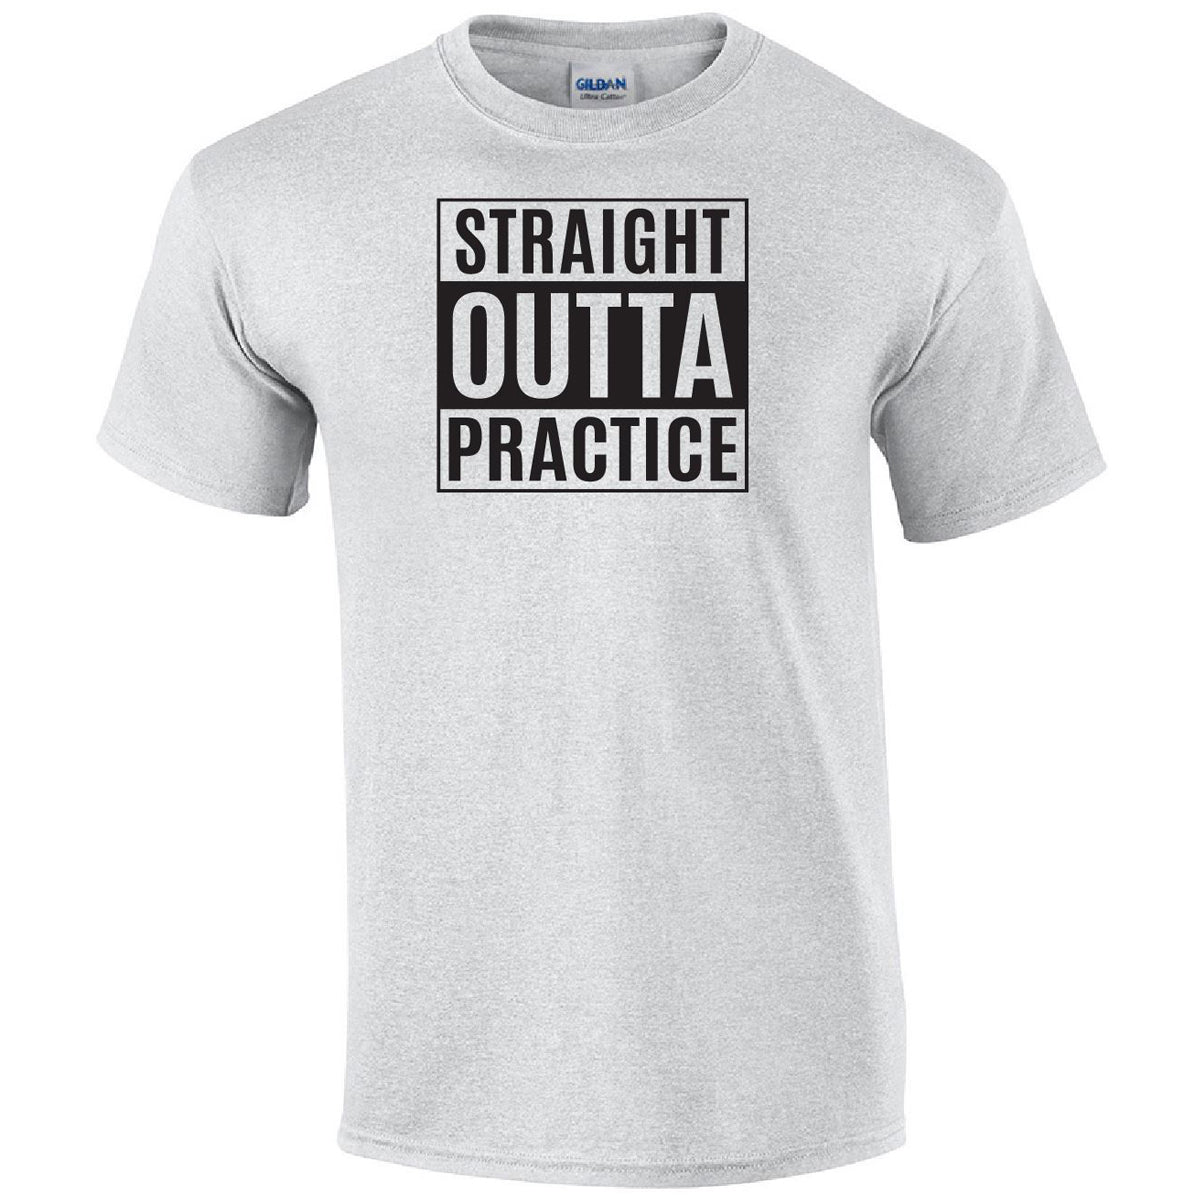 Straight Outta Practice Printed Tee Humorous Shirt 411 Youth Medium Ash 